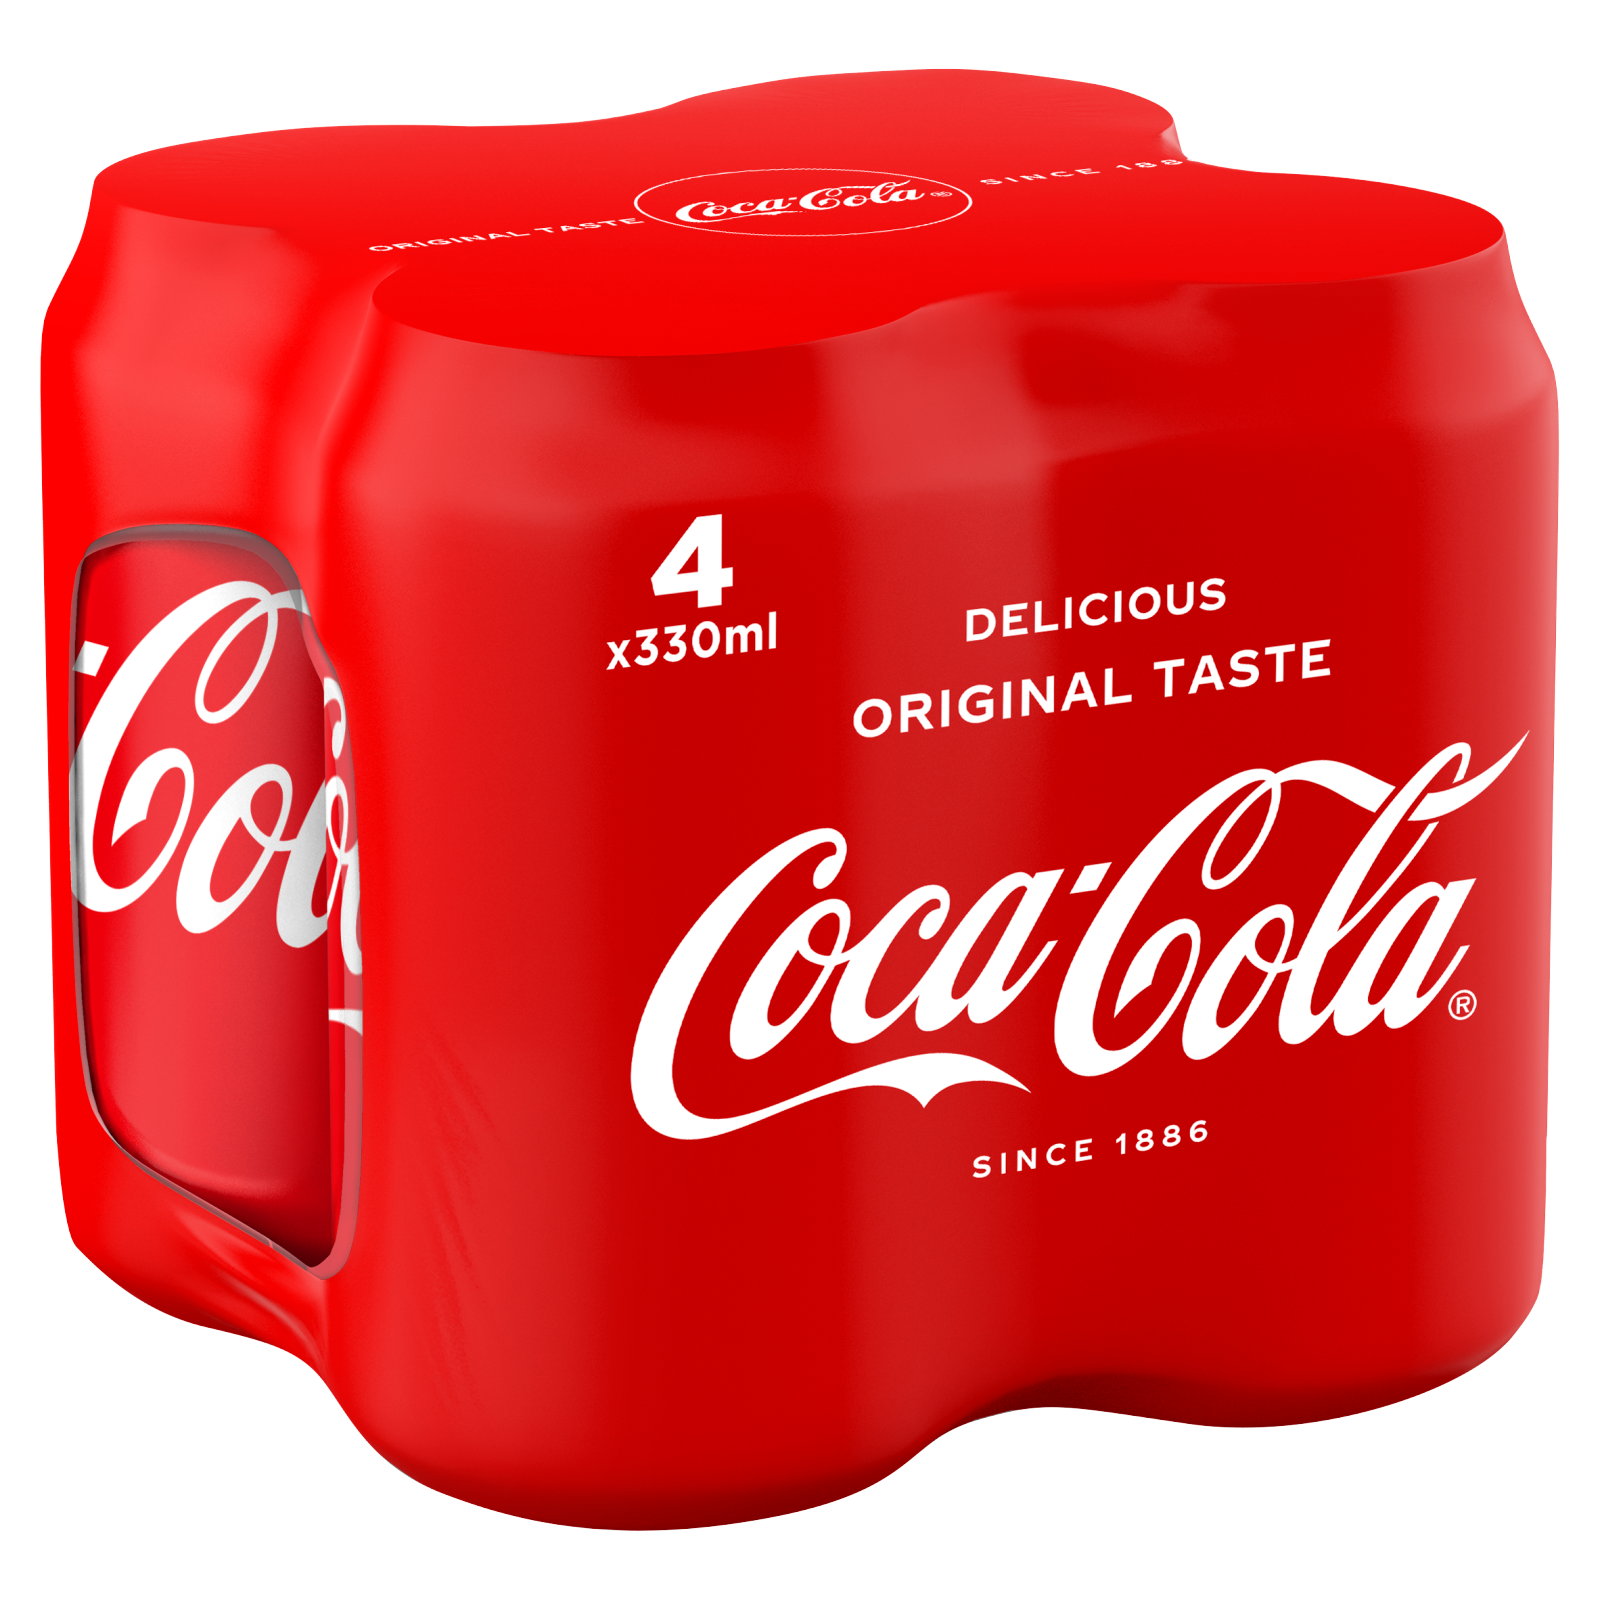 4x330ml Delicious Original Taste Coca-Cola